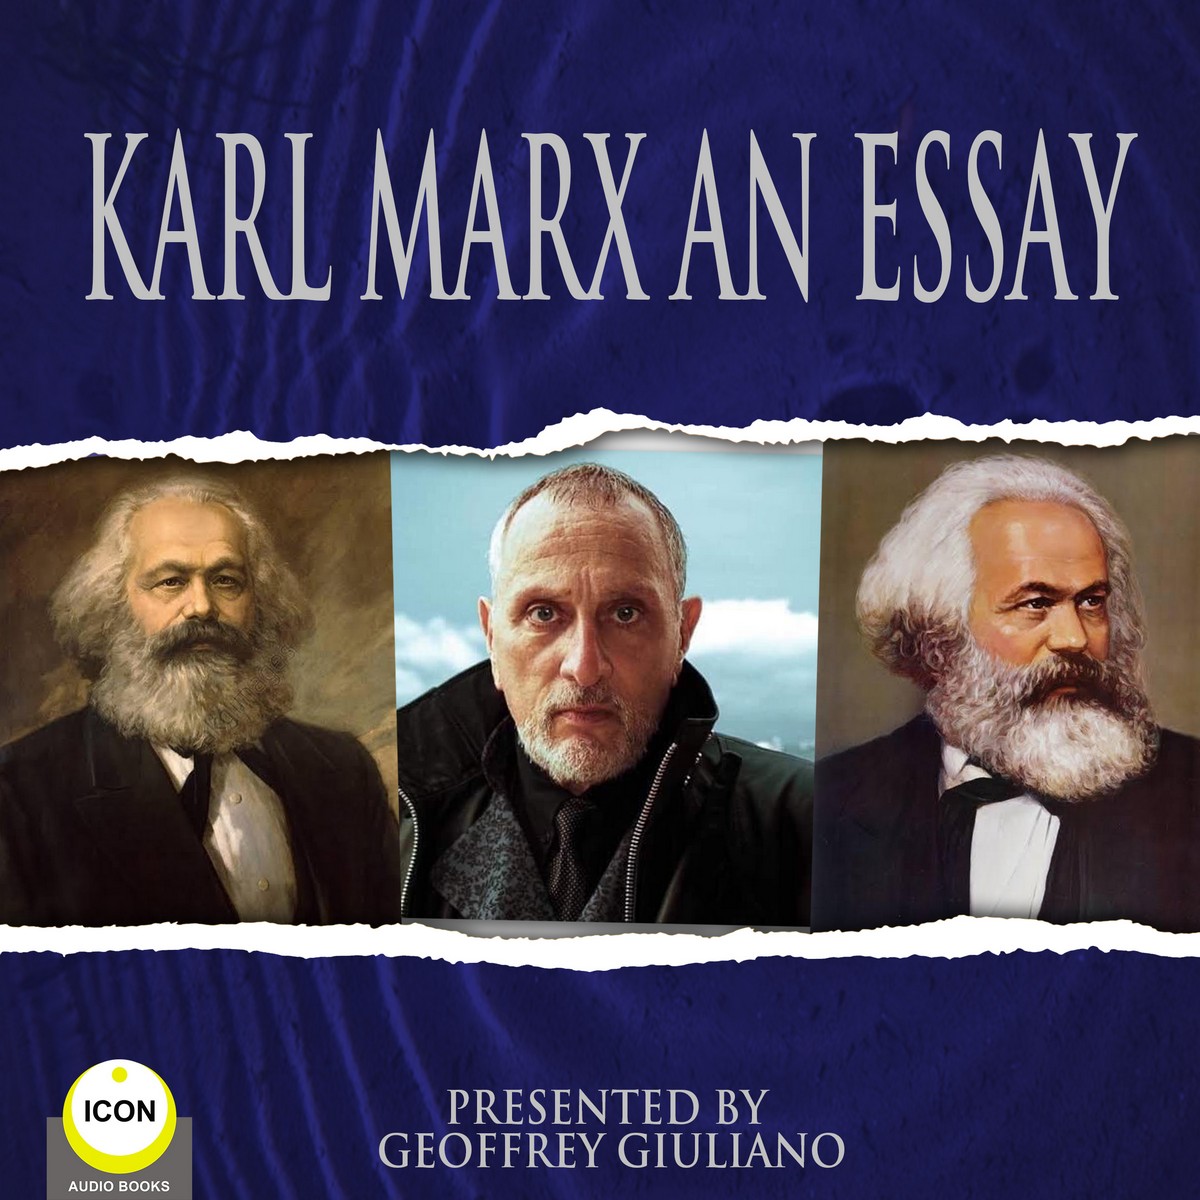 Karl Marx An Essay